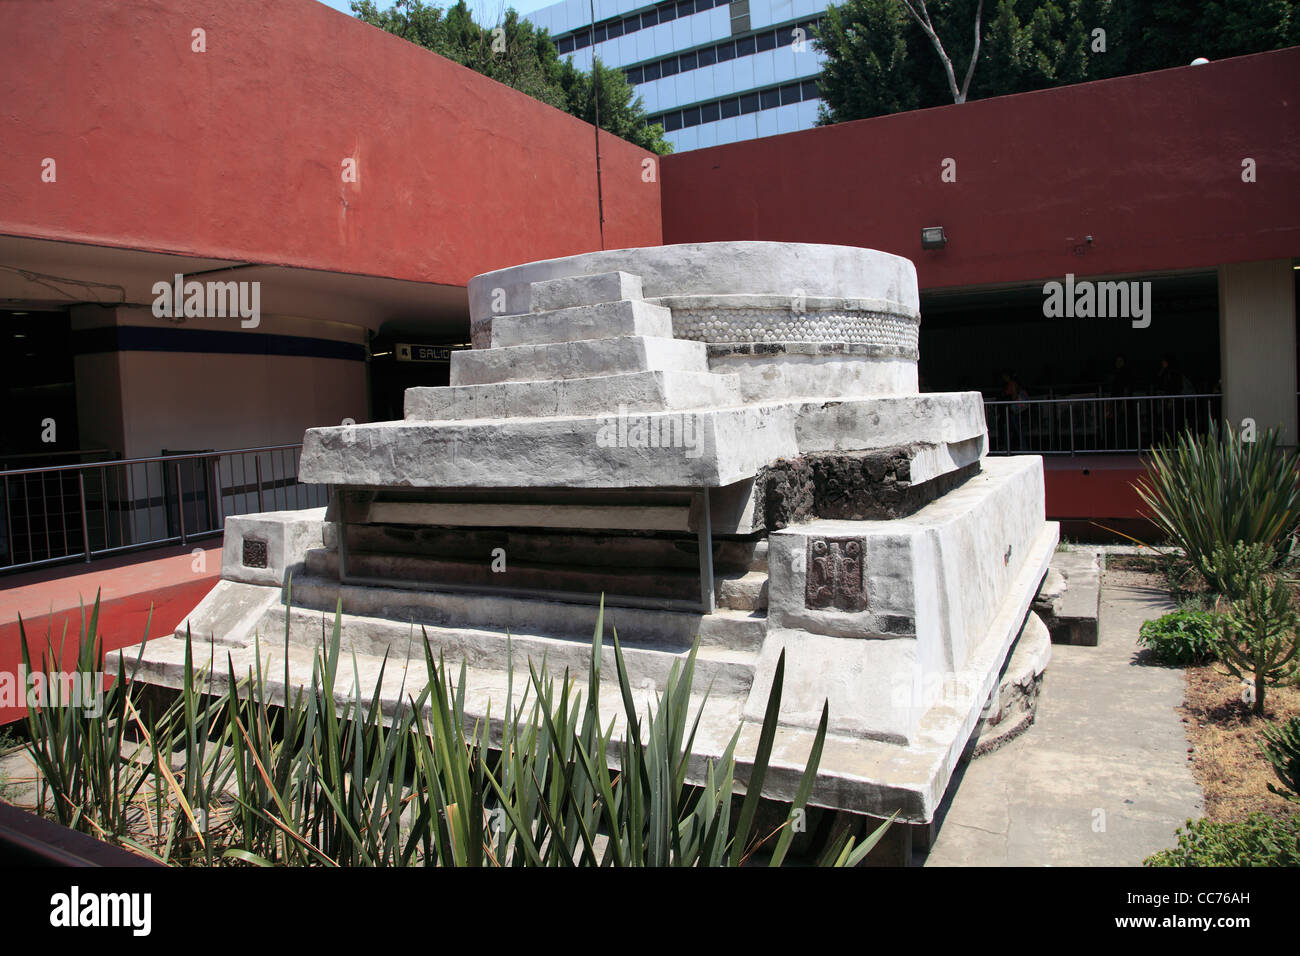 Aztec ruins, known as Adoratorio del Dios Ehecatl, in the Pino Suarez metro station, Mexico City, Mexico Stock Photo